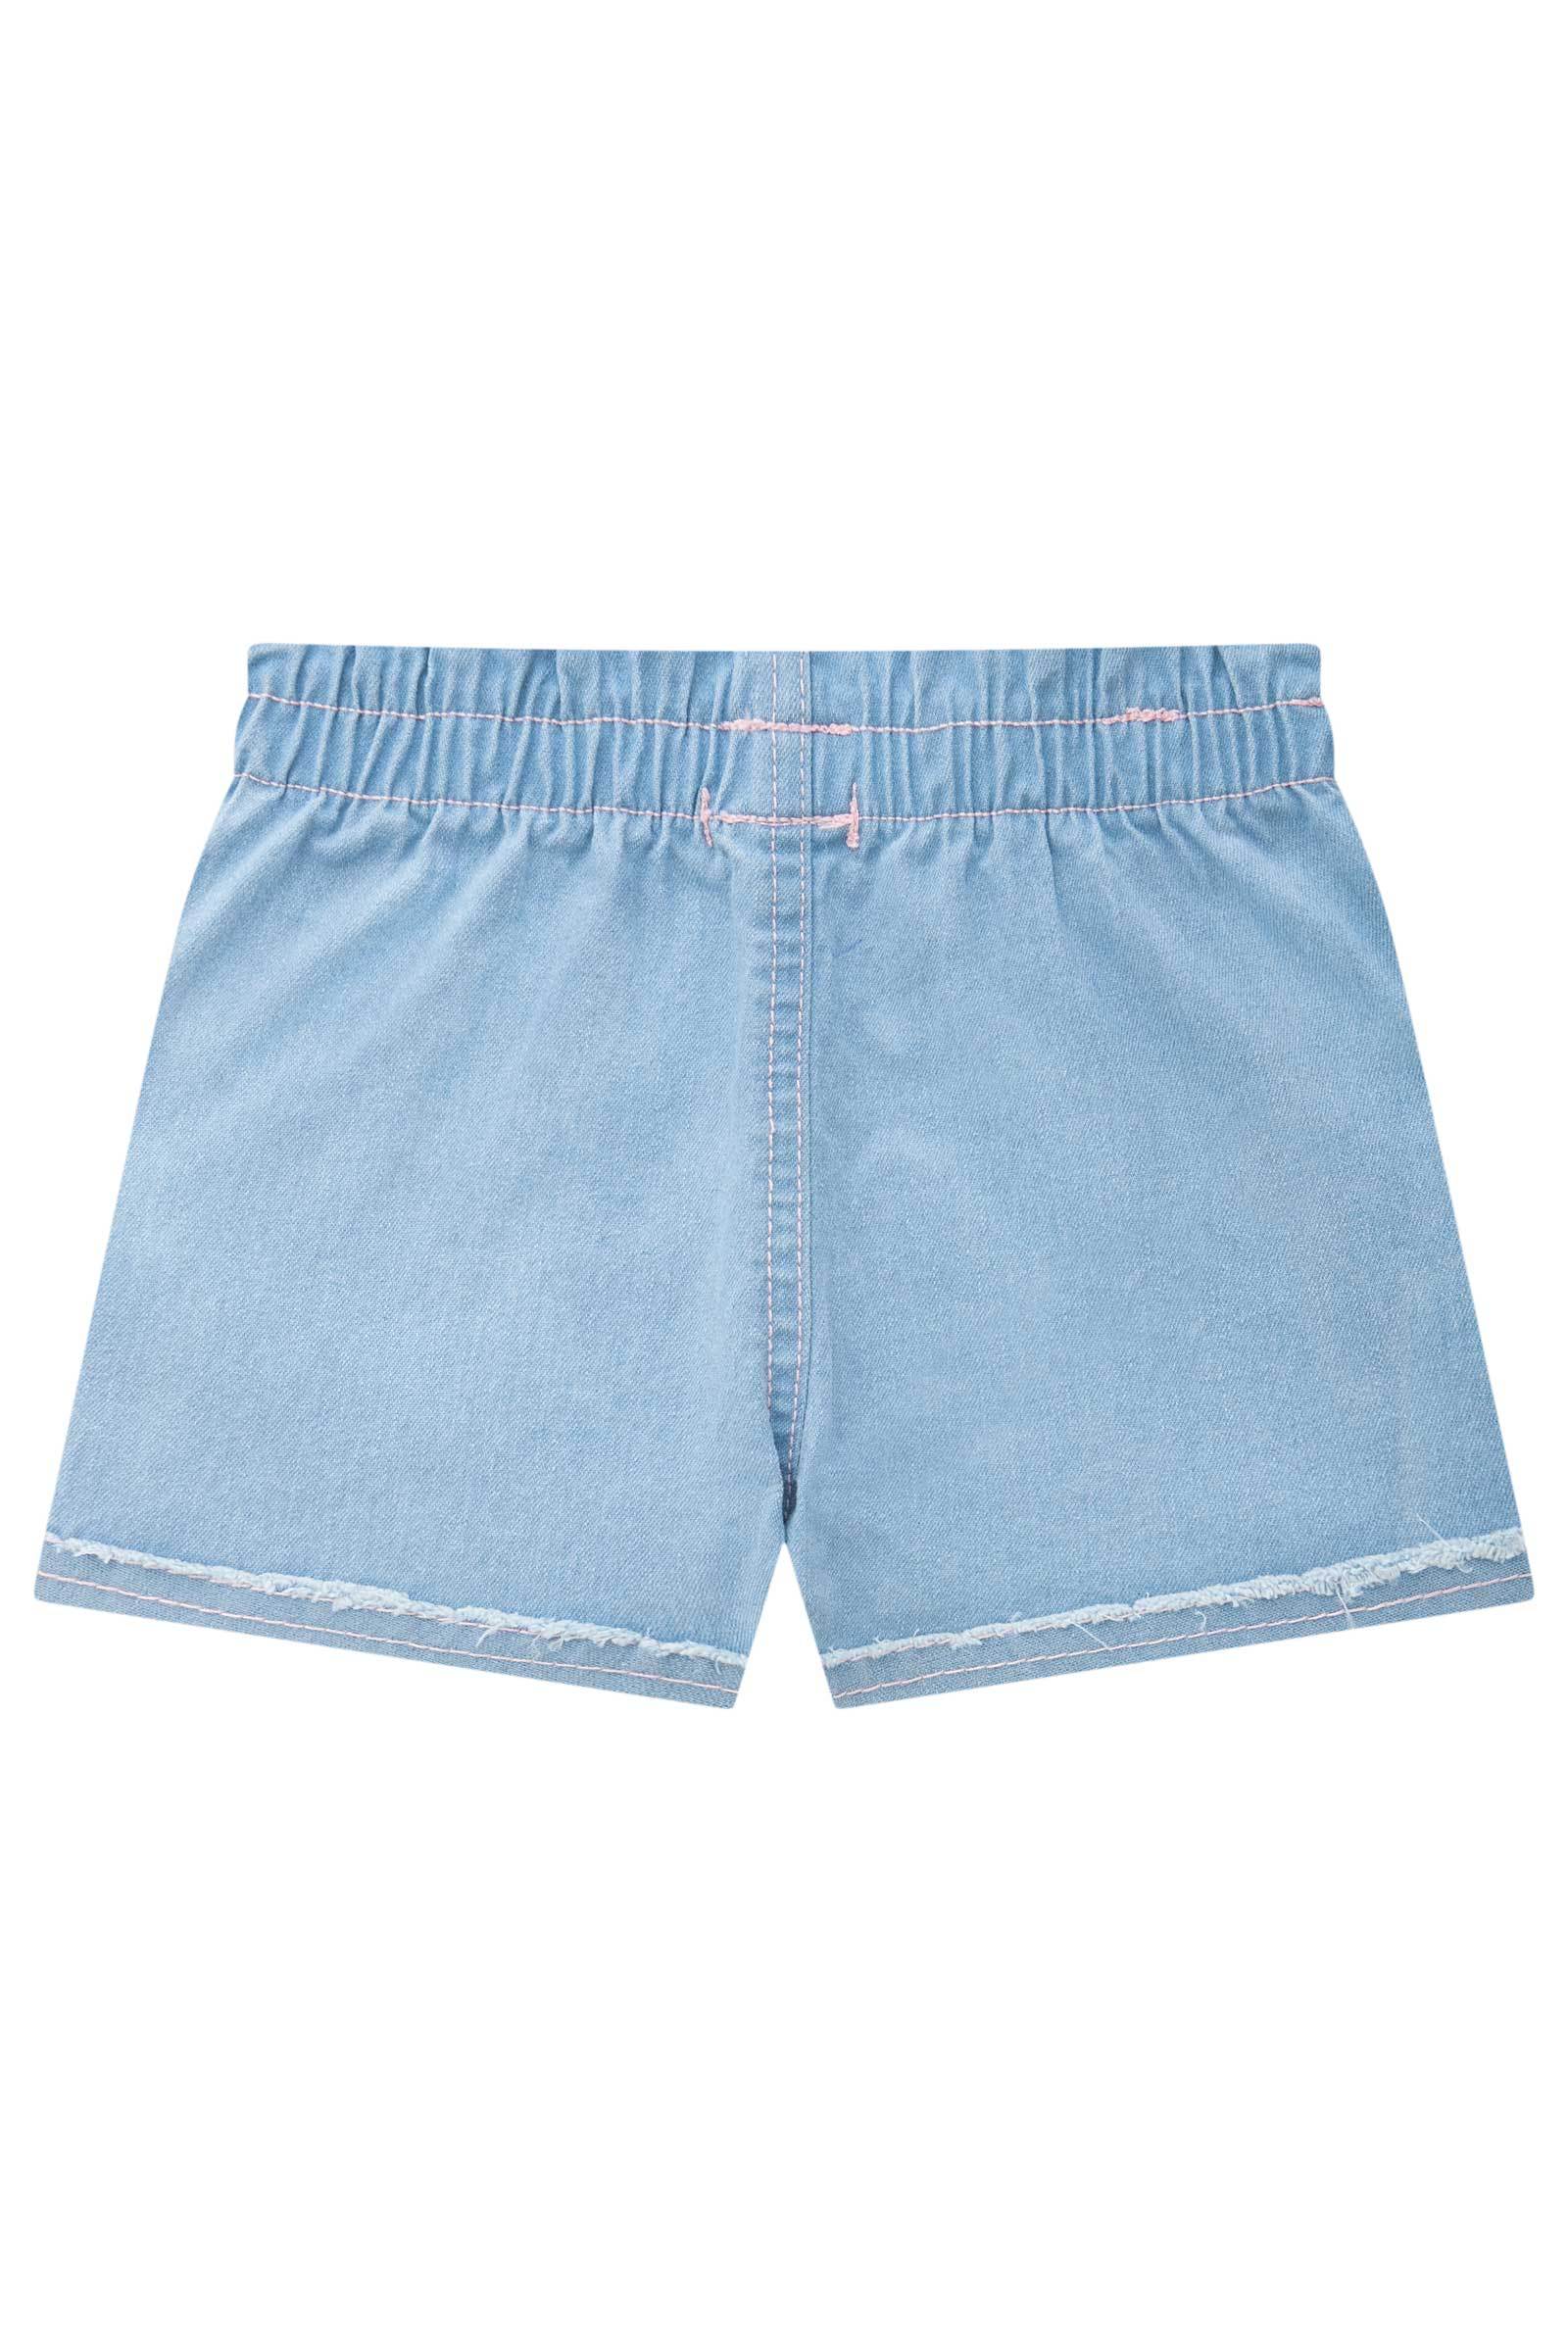 Shorts em Jeans Bellini com Elastano 75465 Infanti